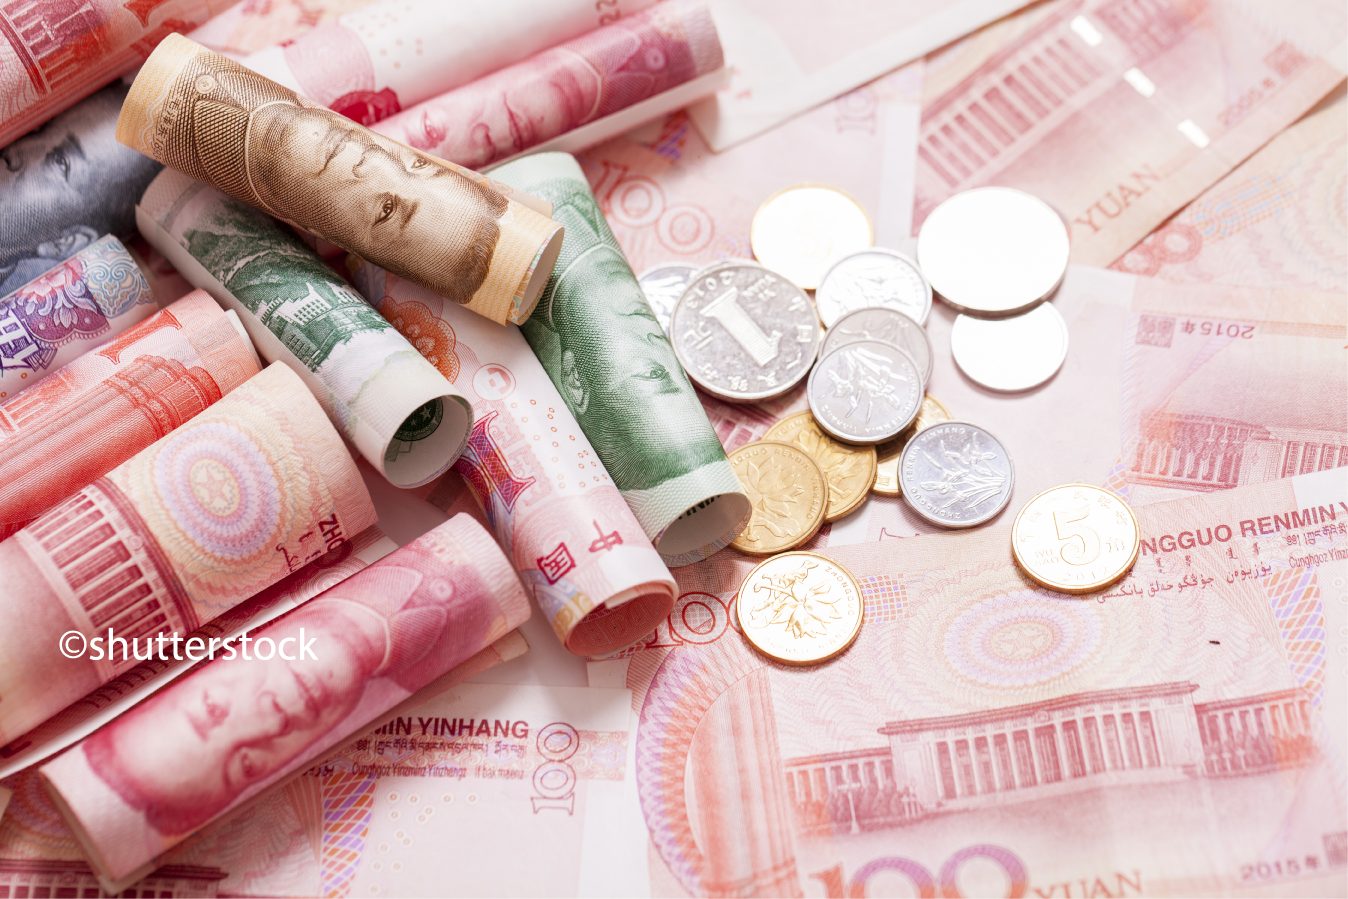 Handbook on Chinese lending institutions